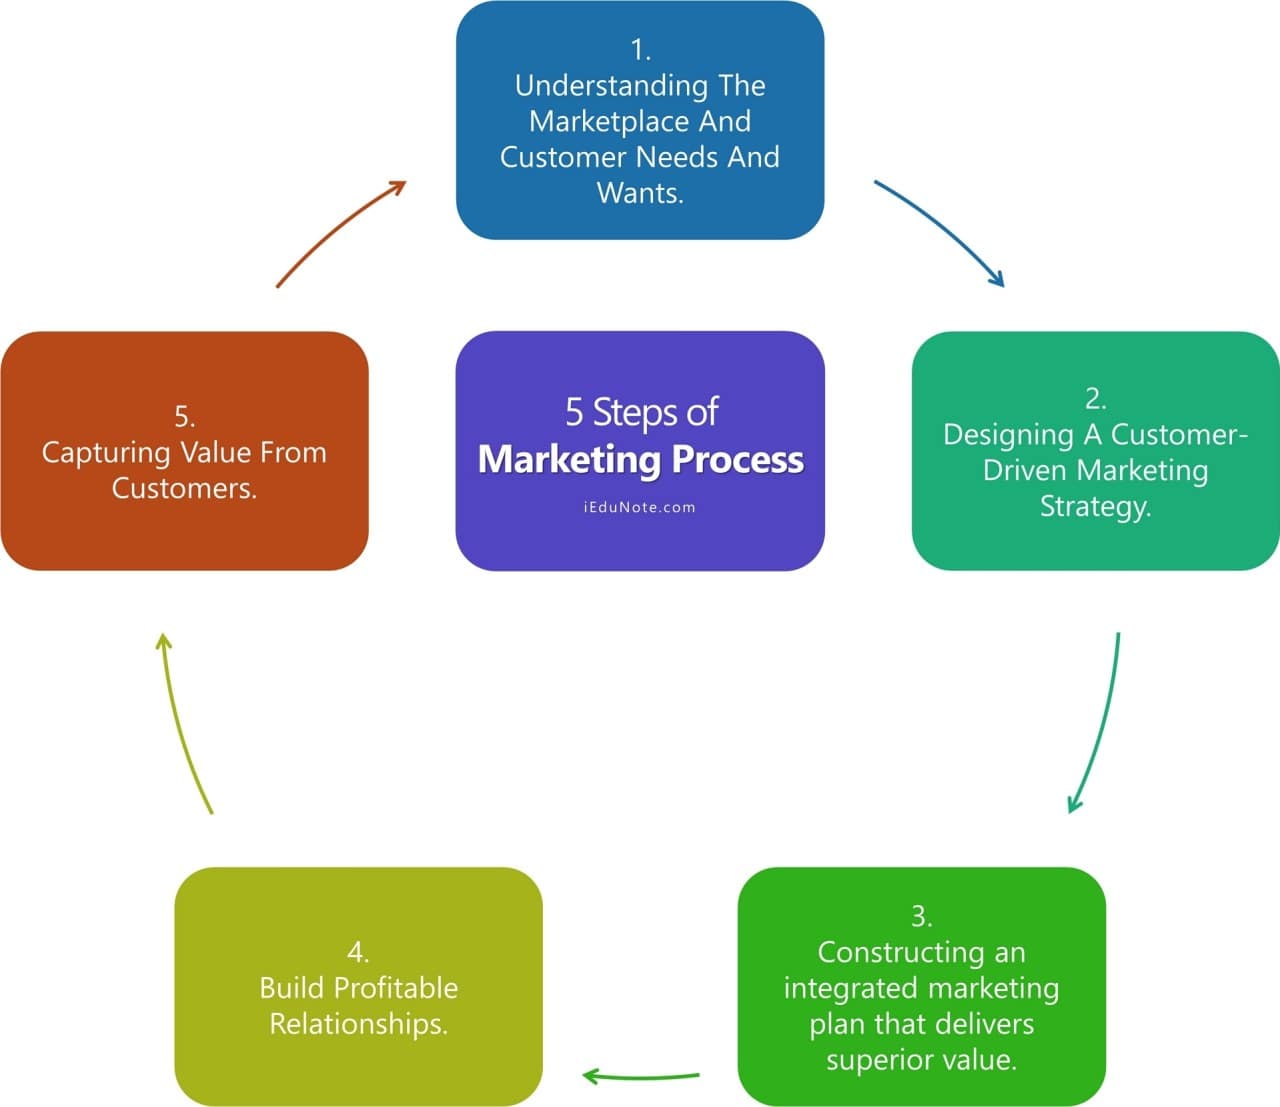 The marketing process